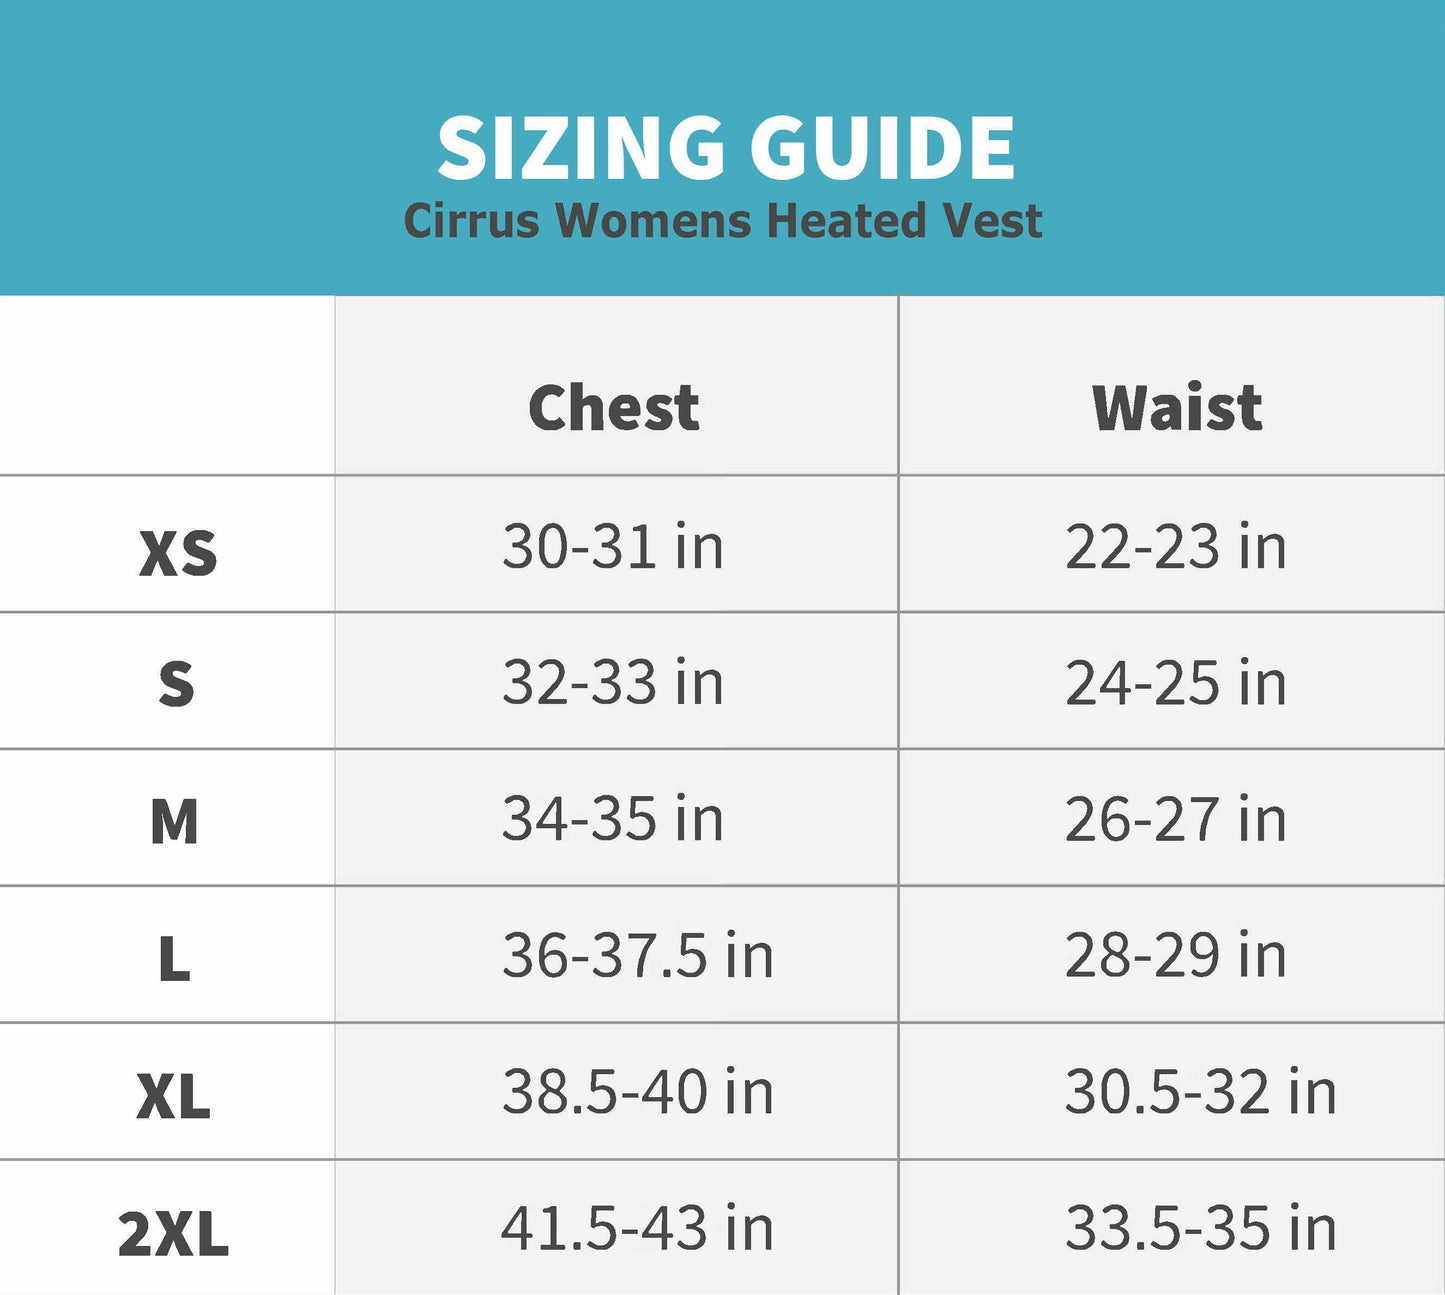 Cirrus Womens Heated Vest